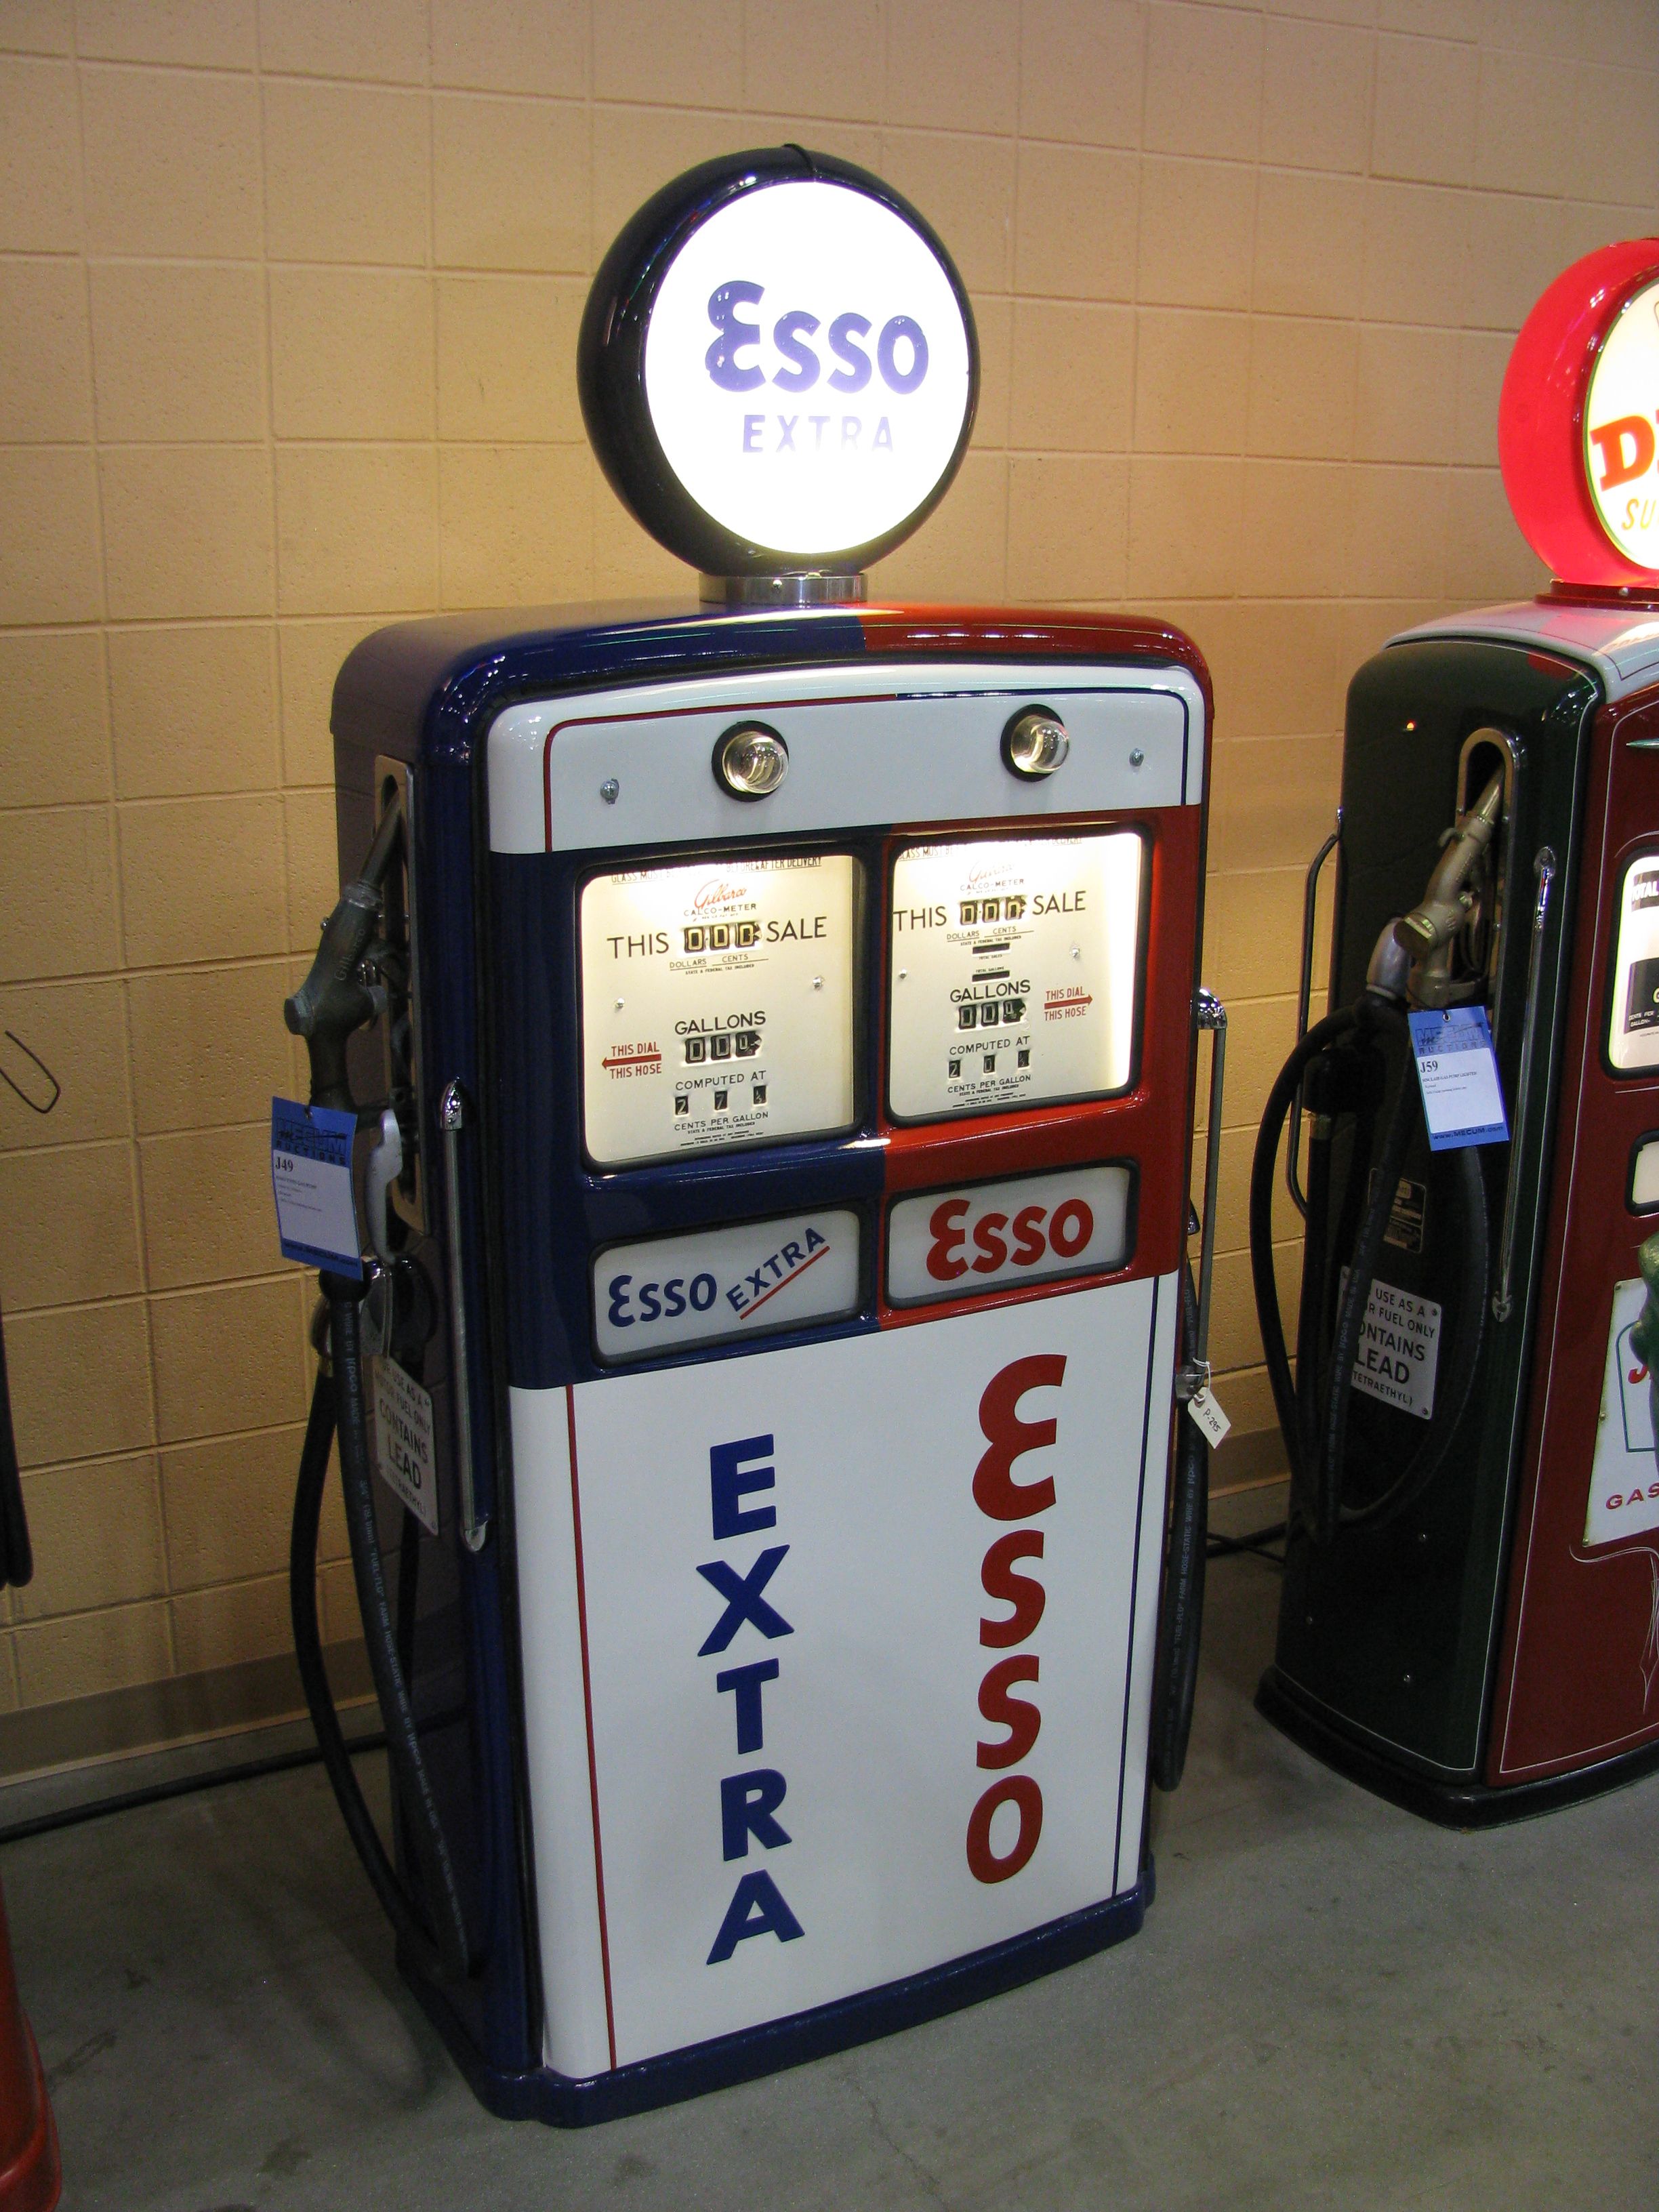 polly gasoline gas pump - Google Search | Gas pumps | Pinterest ...